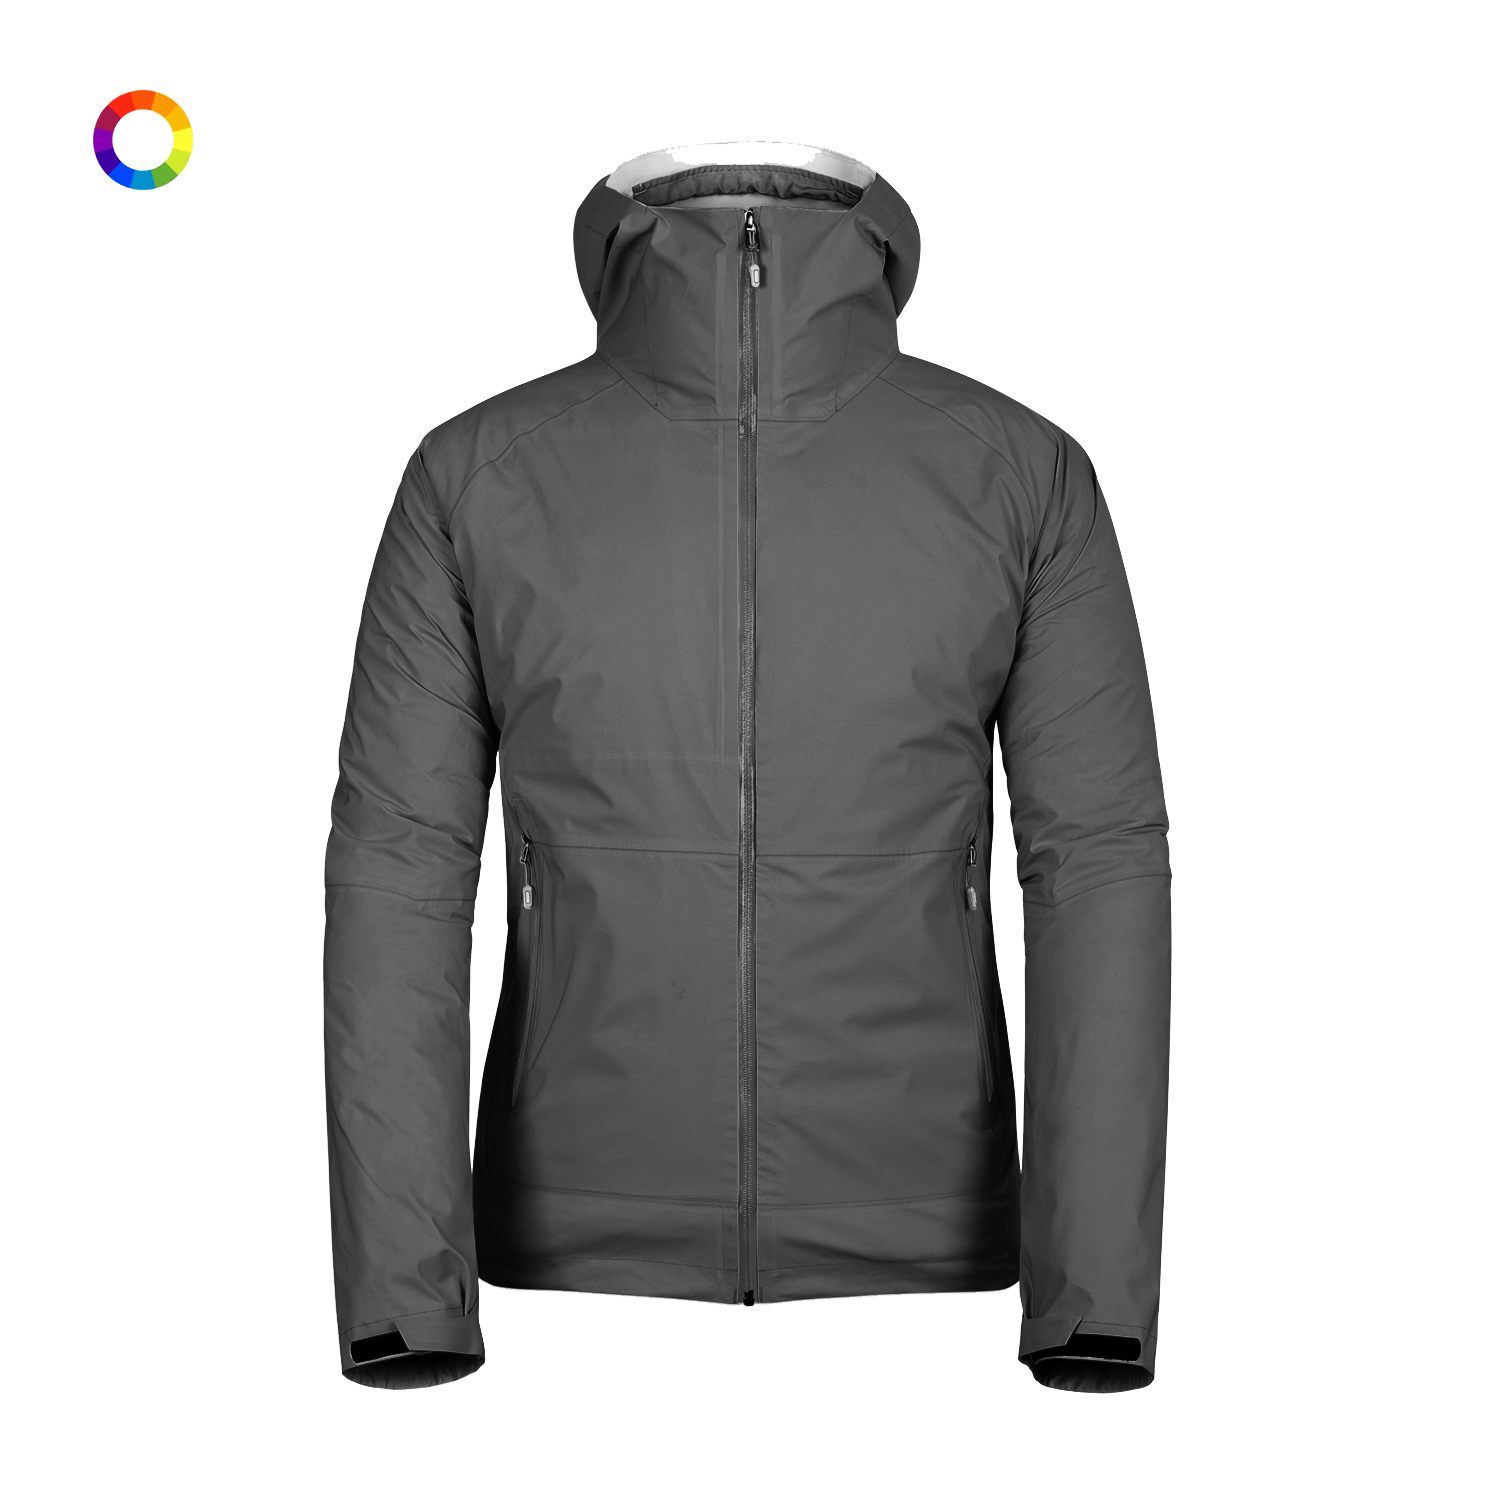 XS / Men's / Custom Custom The Custom Rain Jacket